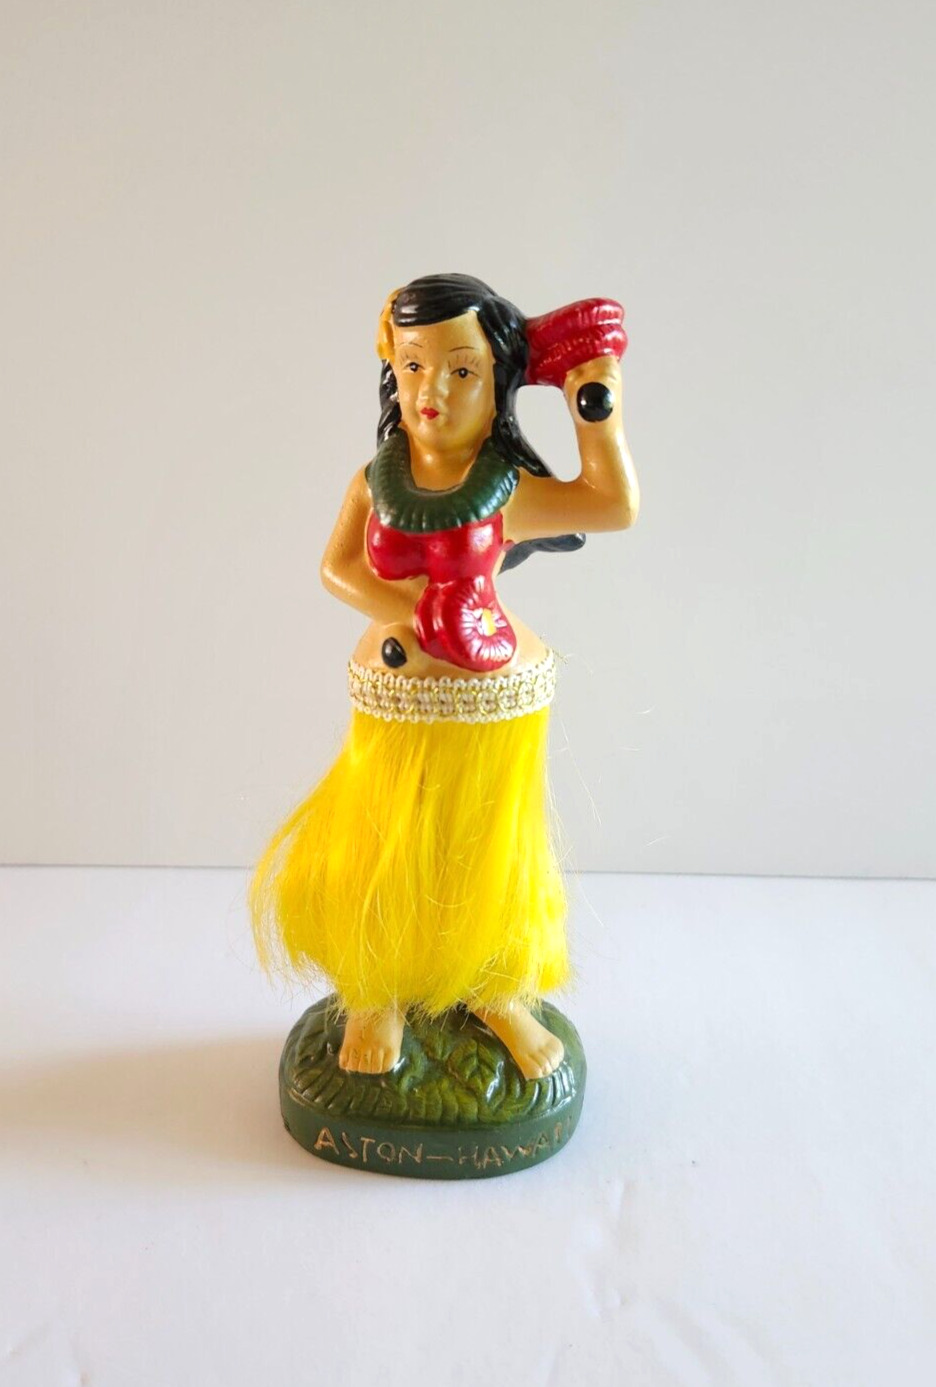 Vtg Hula Dashboard Nodder Figurine Doll w/Red Maracas Yellow Skirt Aston Hawaii